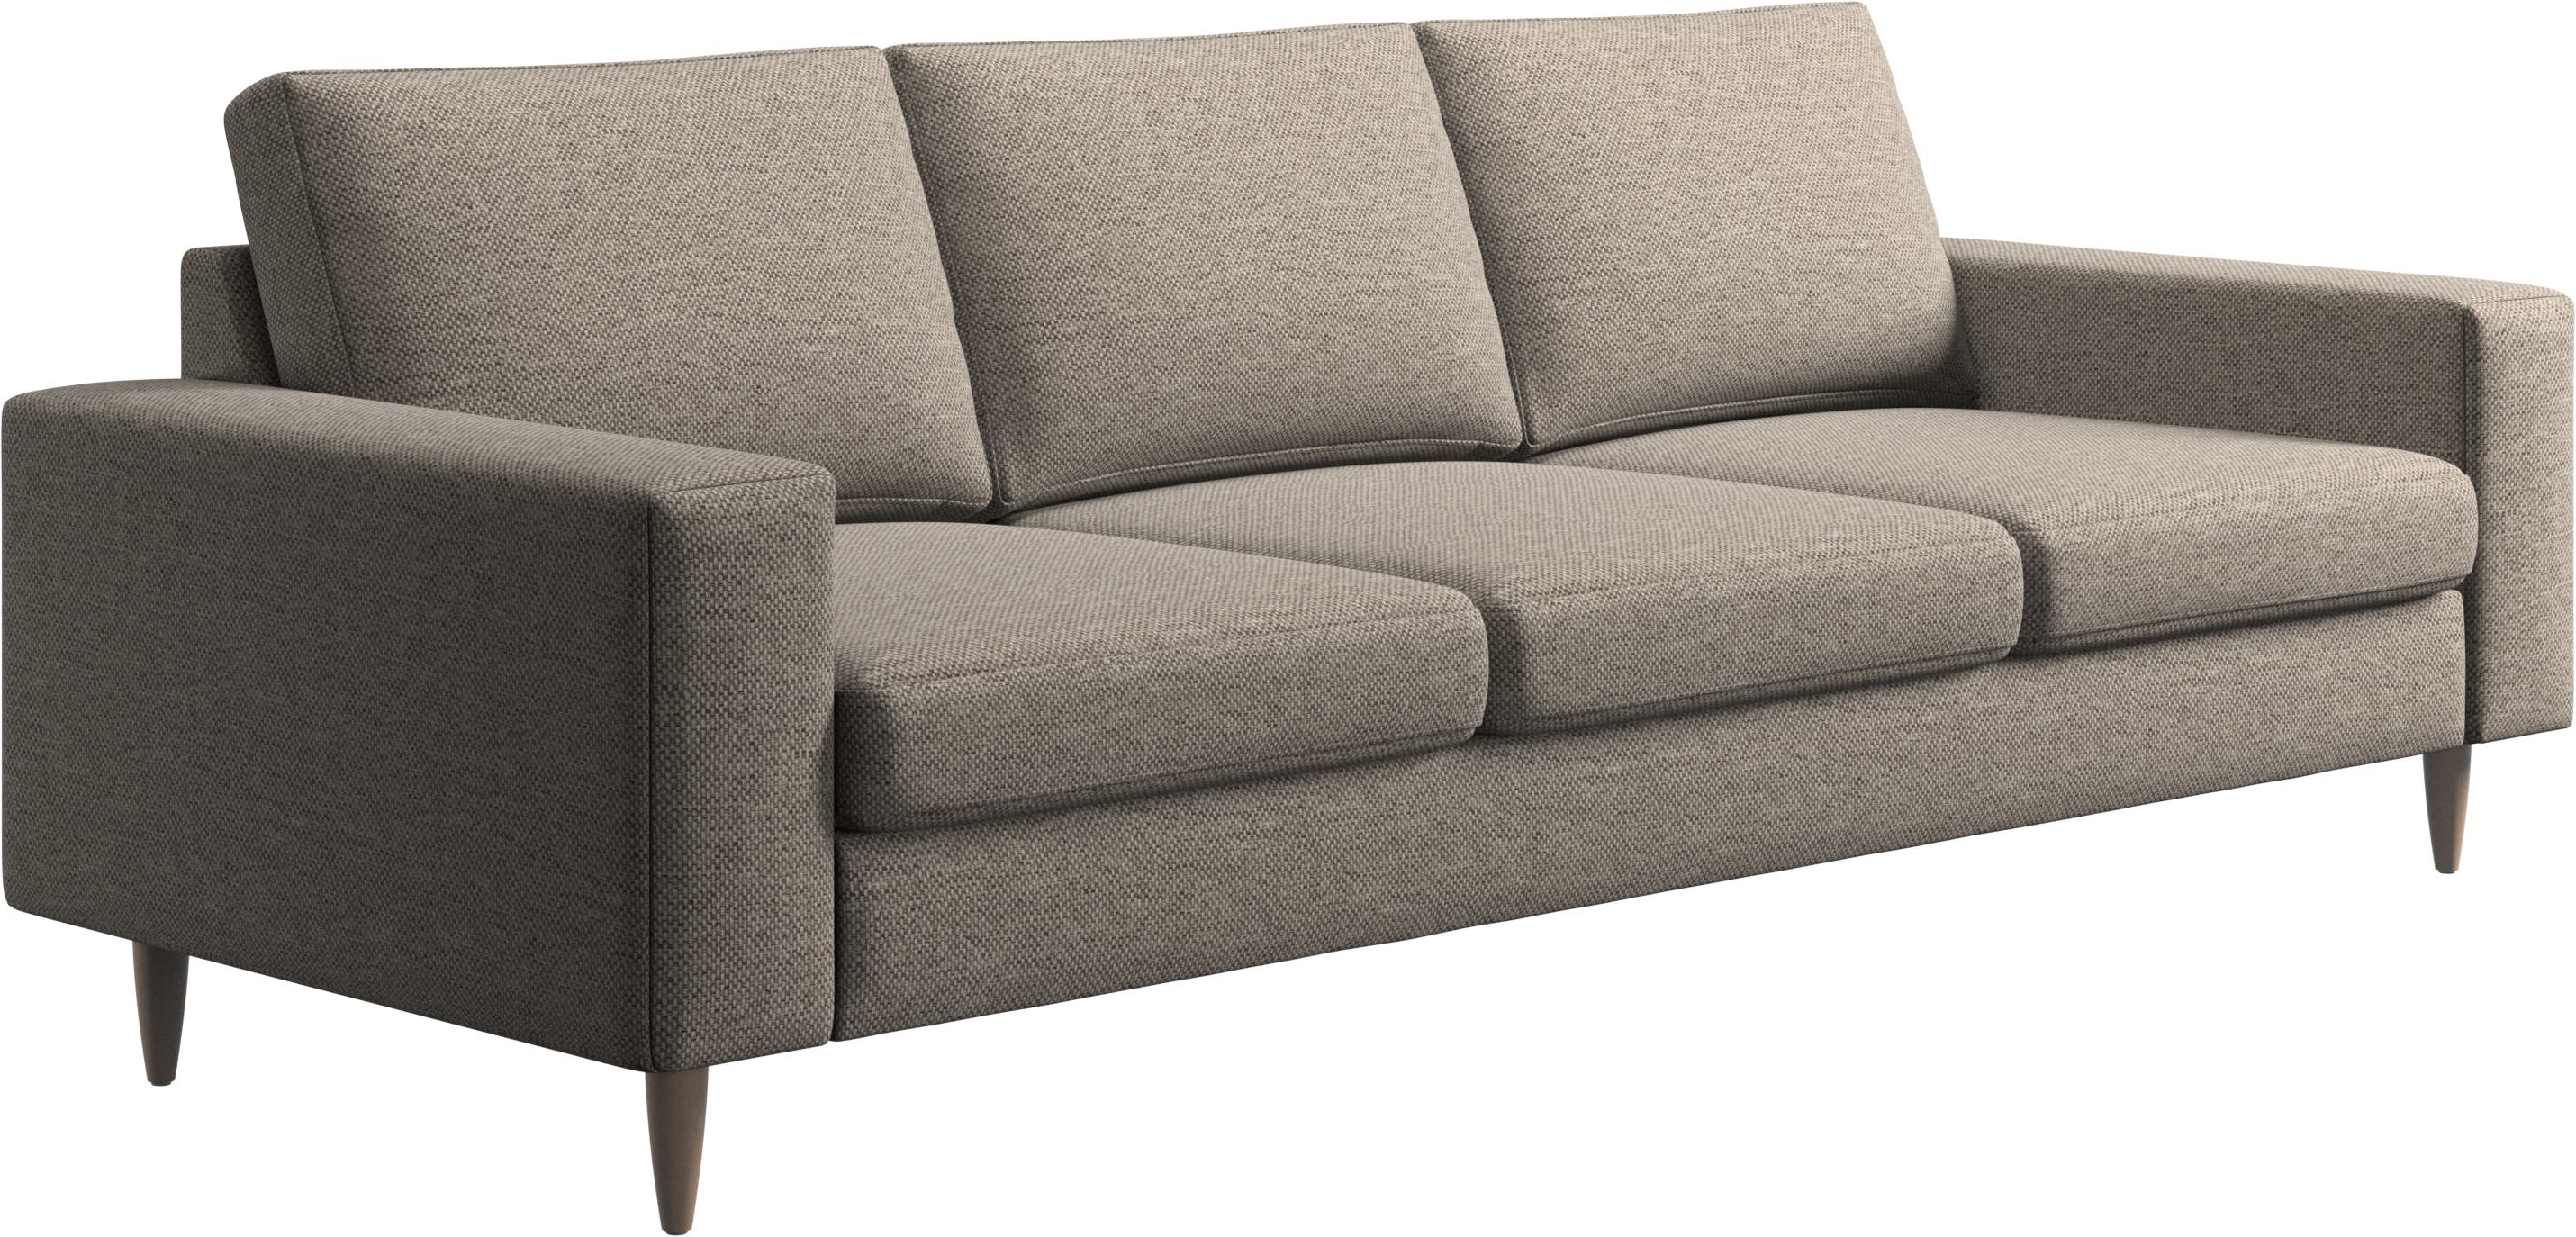 3 seater designer sofas | See all our designs | BoConcept